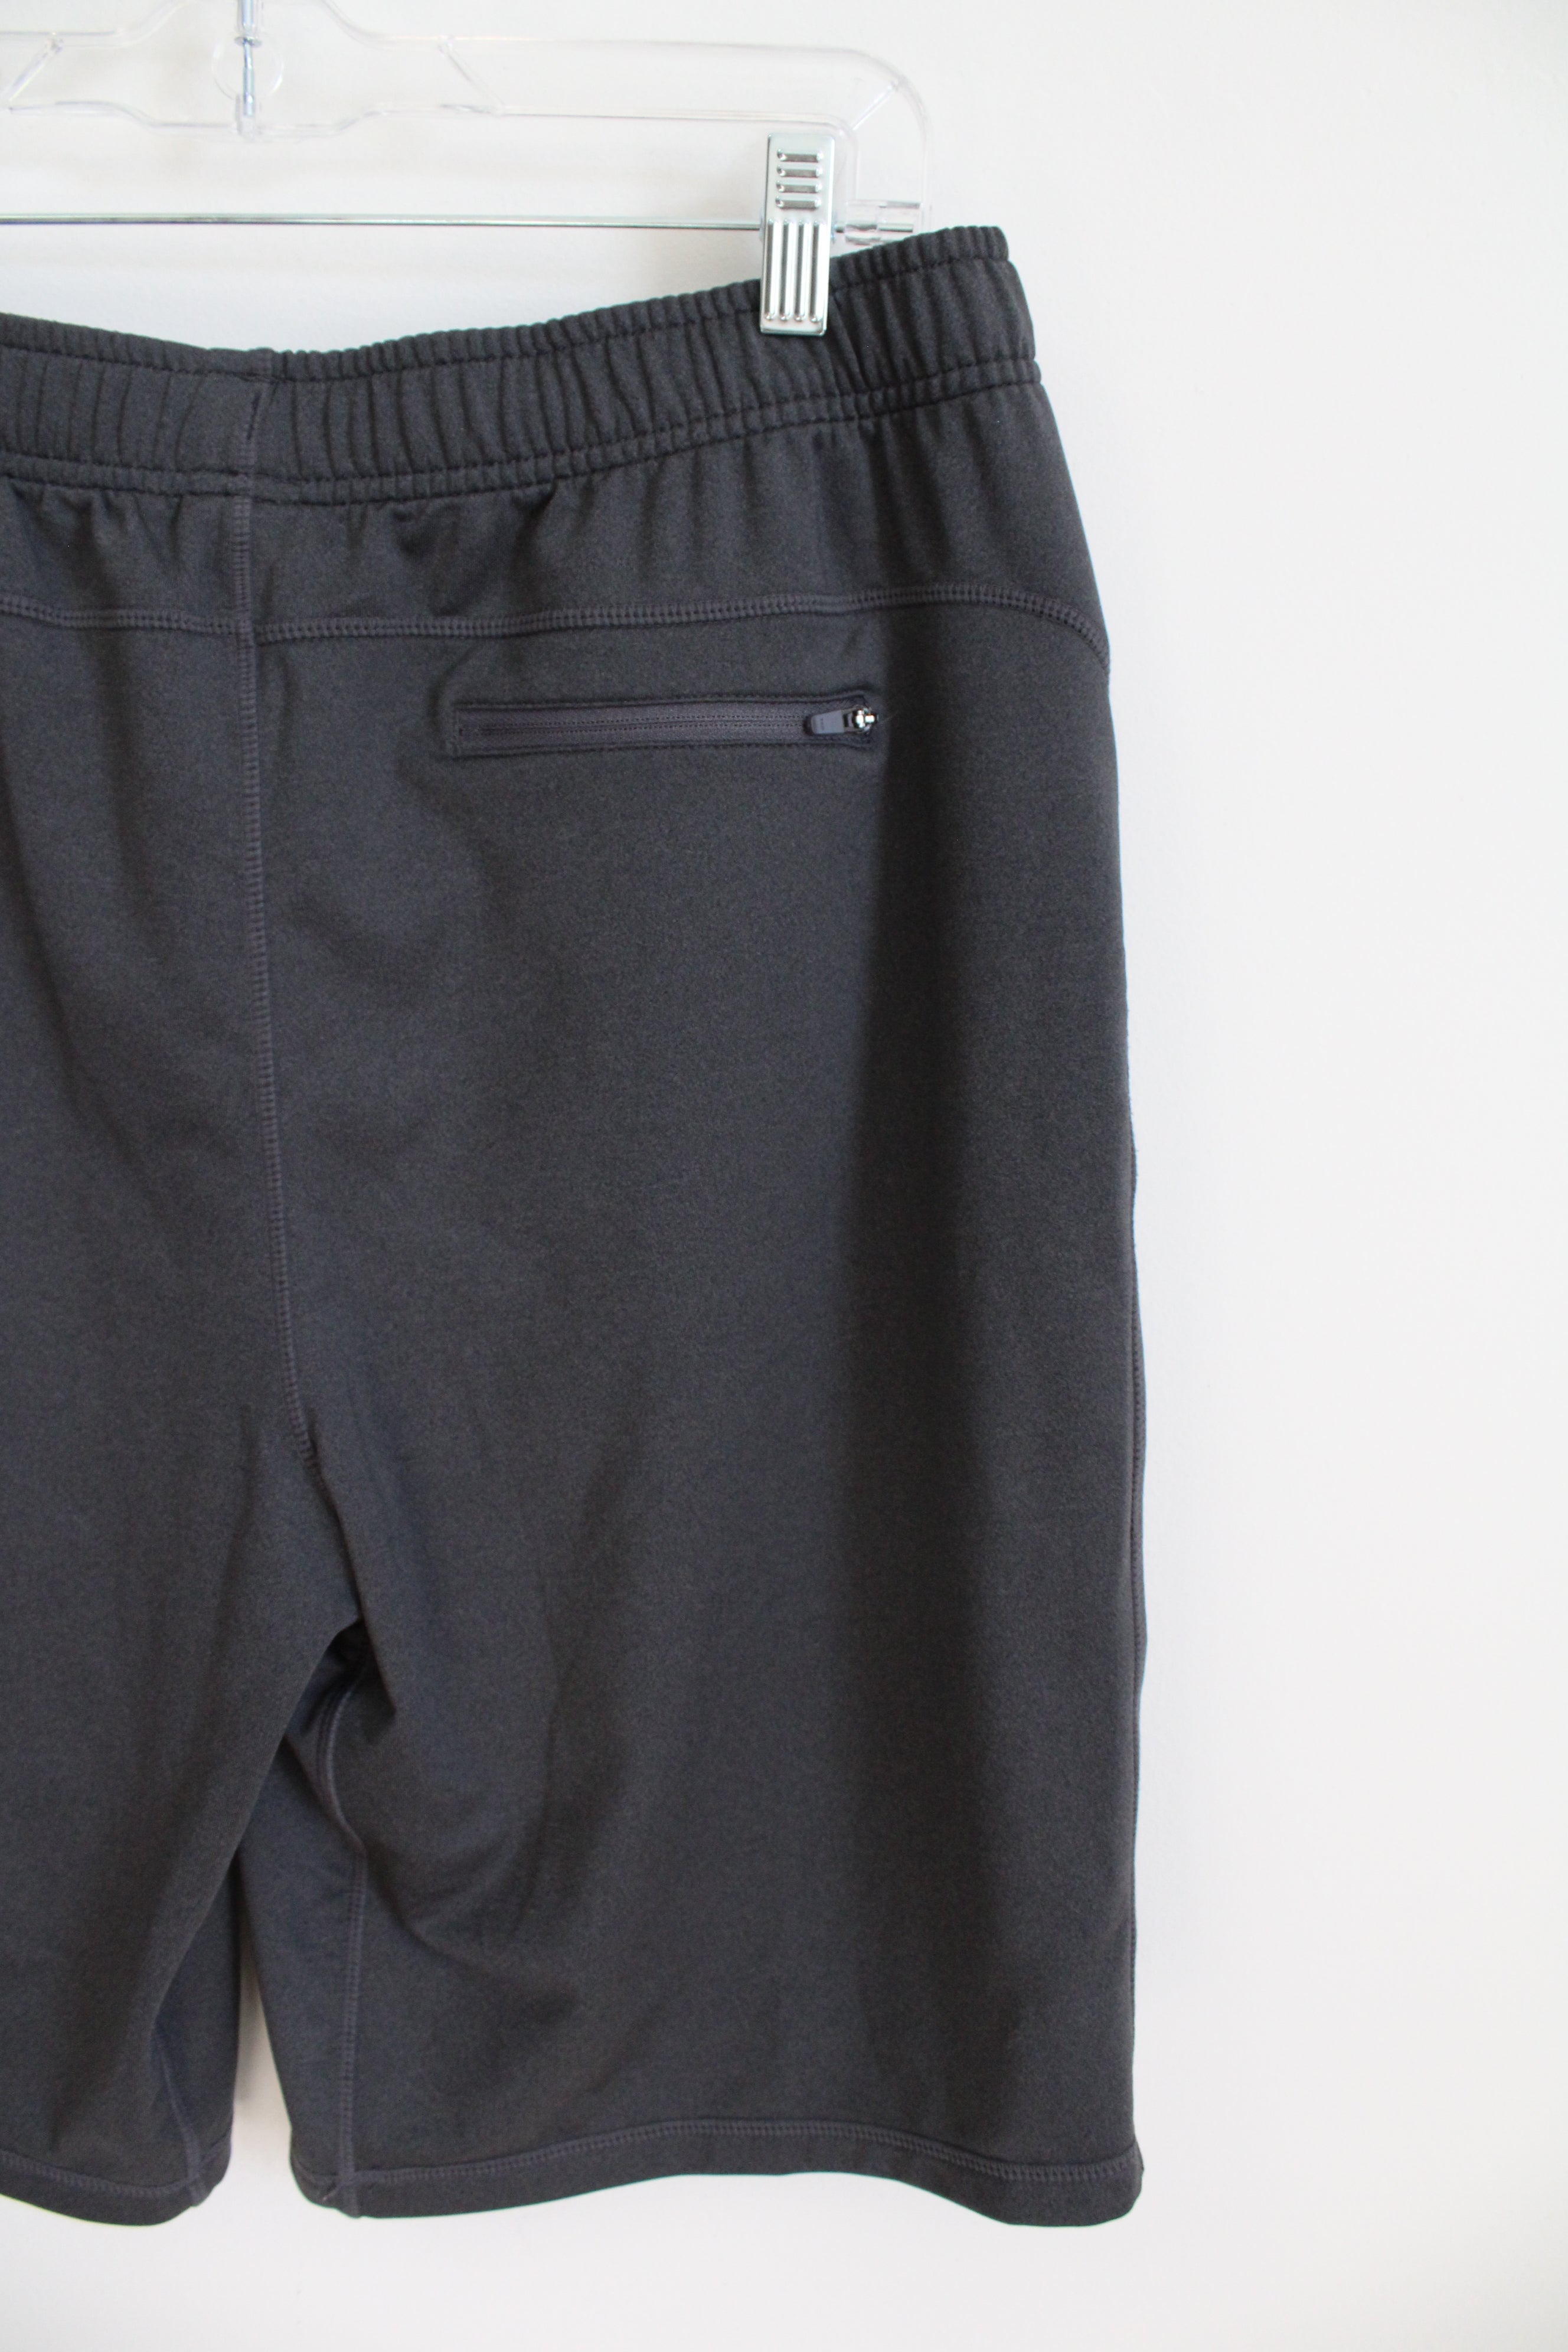 Kirkland Gray Shorts | M